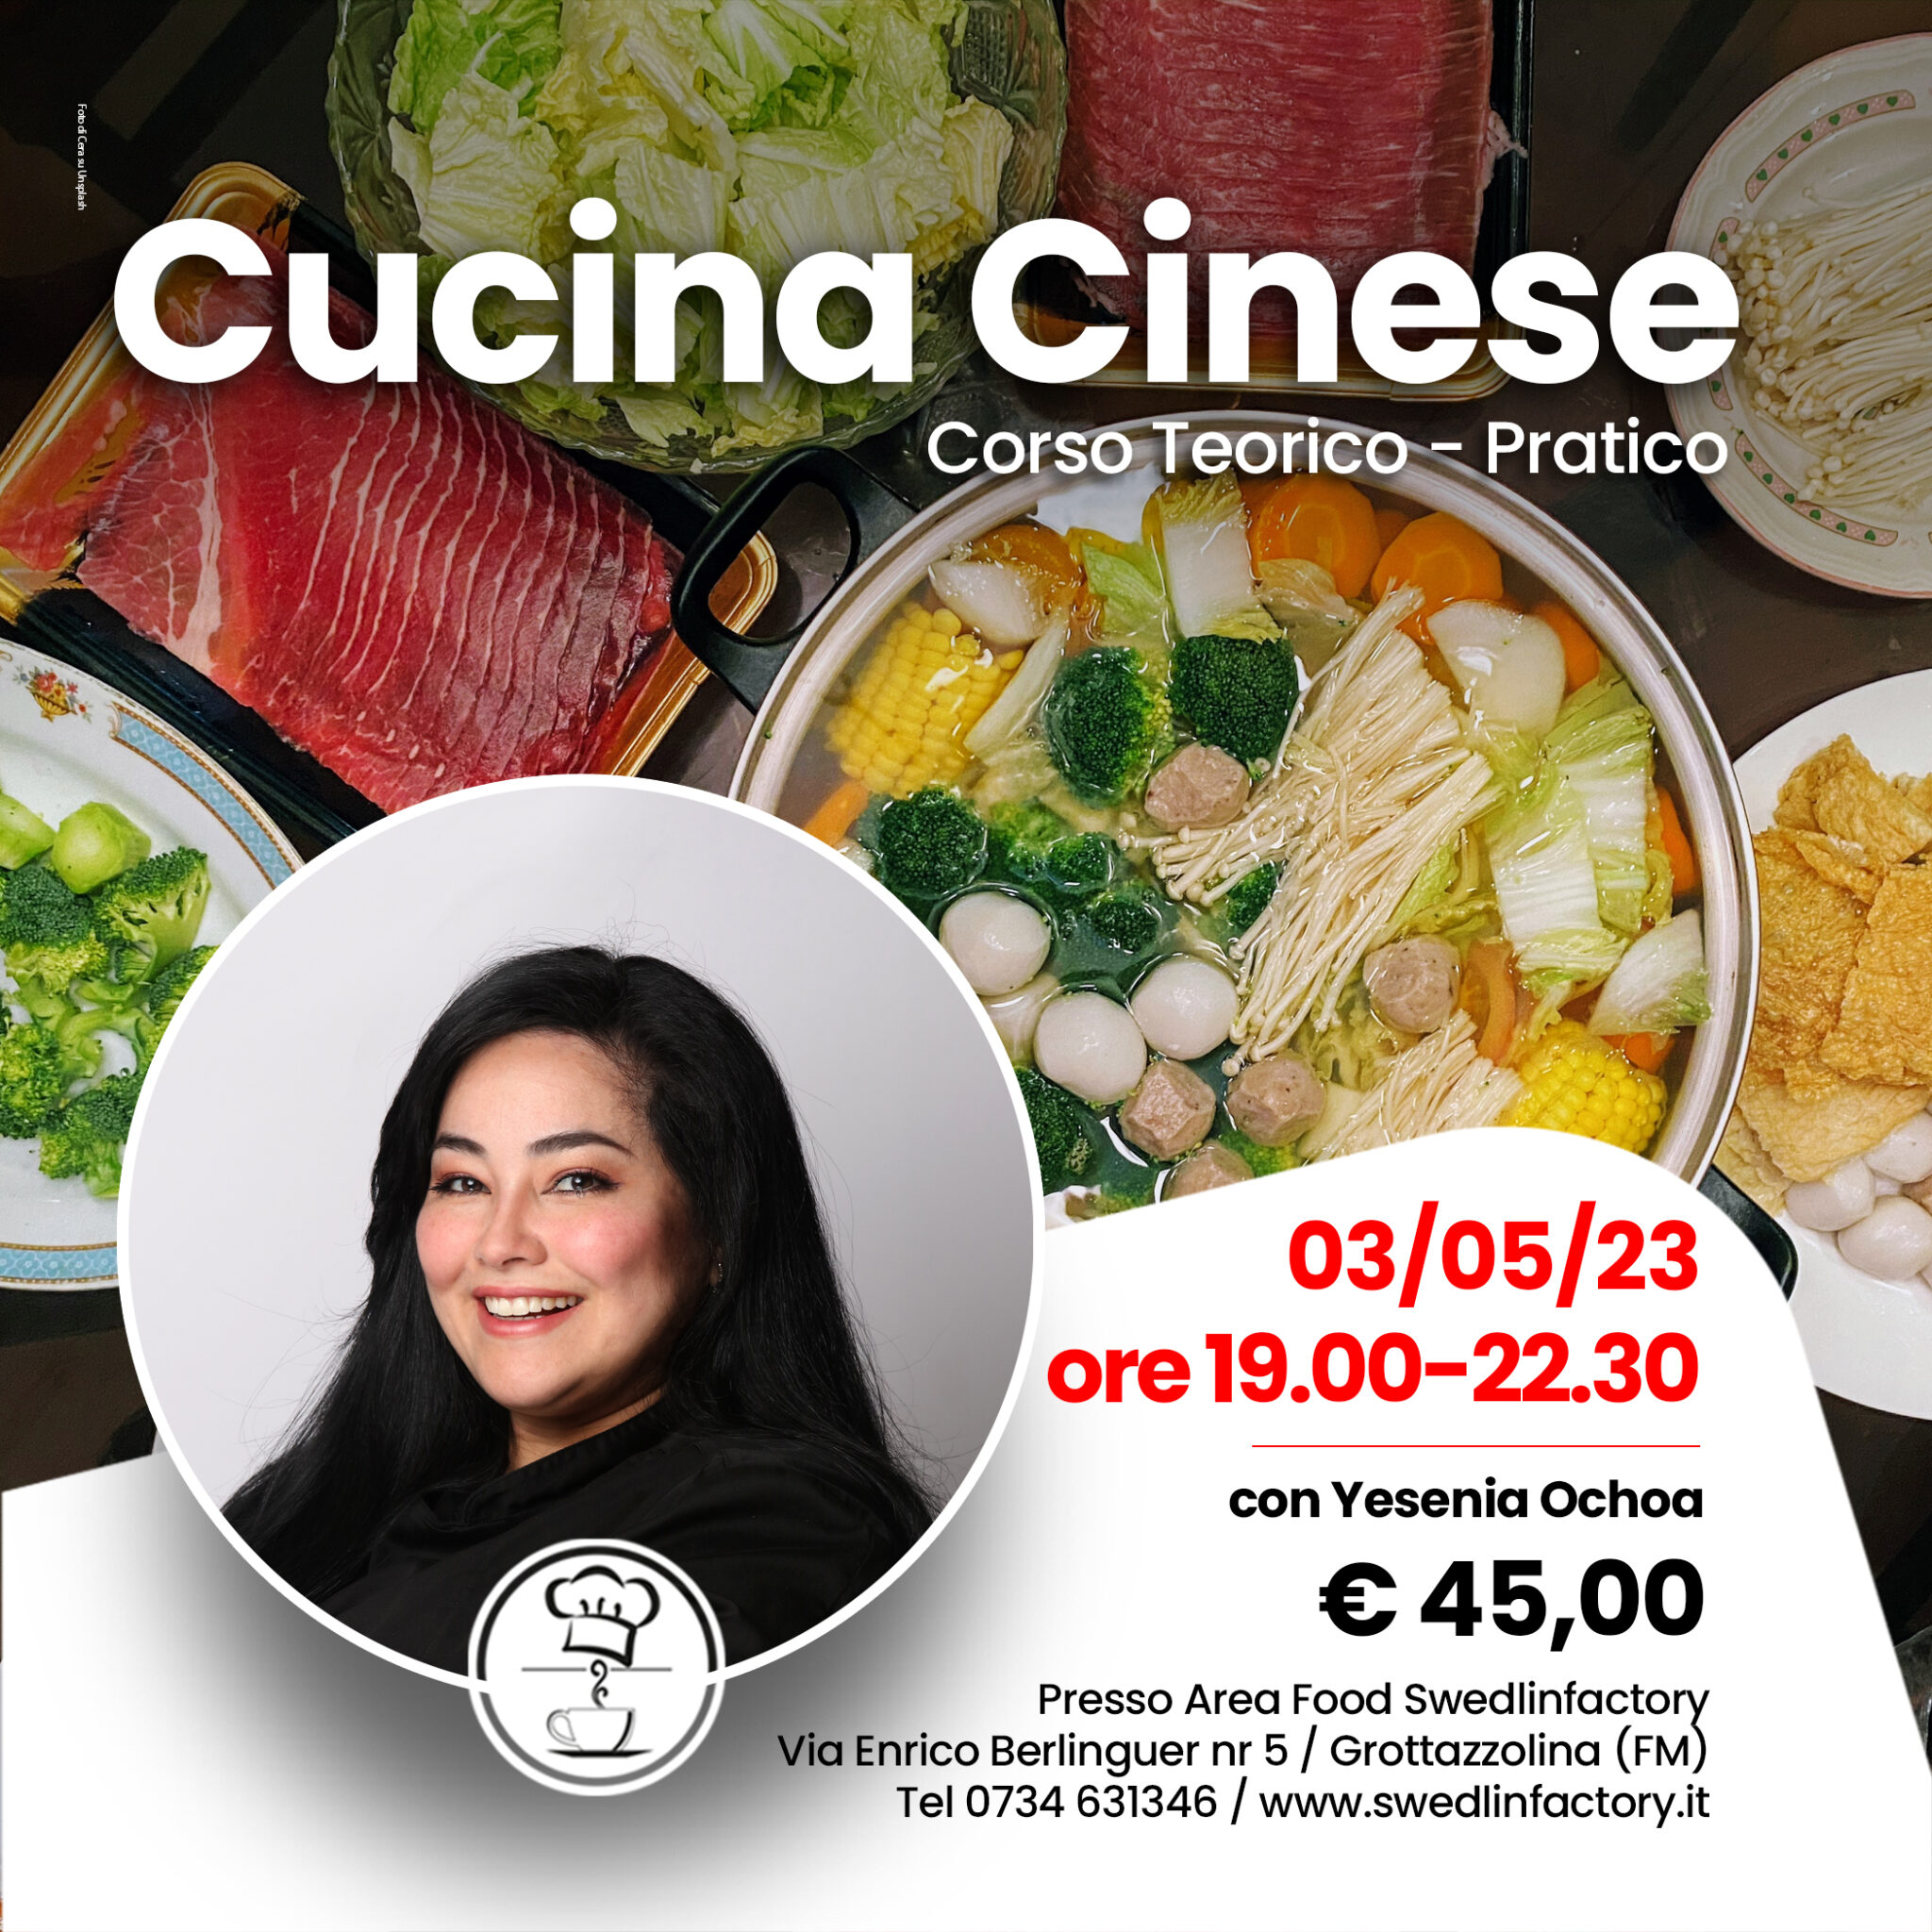 Cucina Cinese - Corso con Yesenia Ochoa - Swedlinfactory